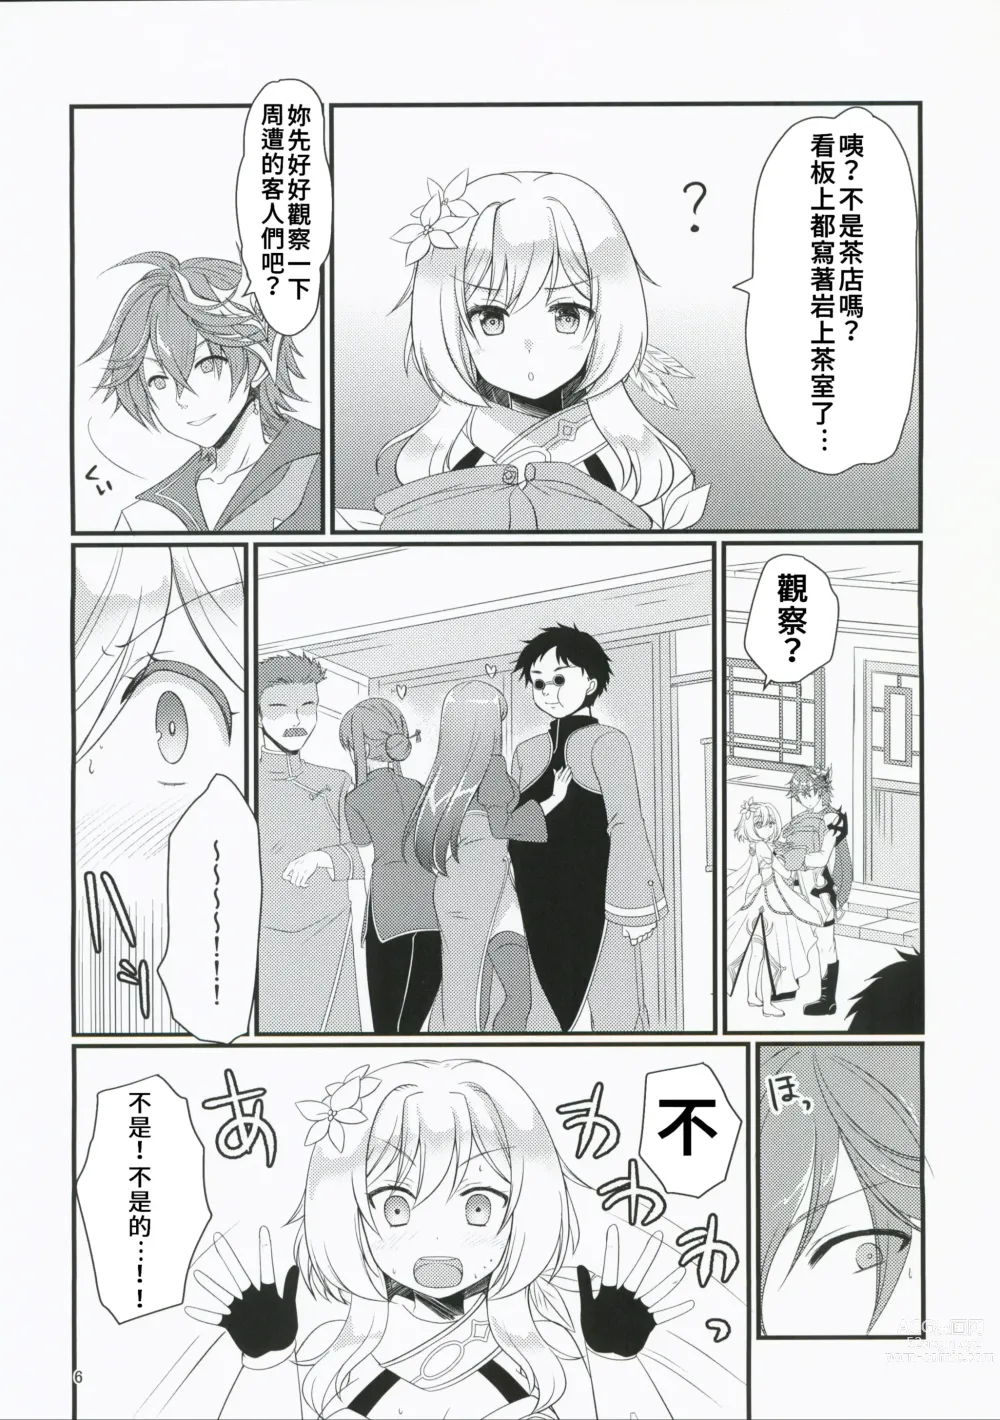 Page 6 of doujinshi 那裡是做什麼的我當然知道!